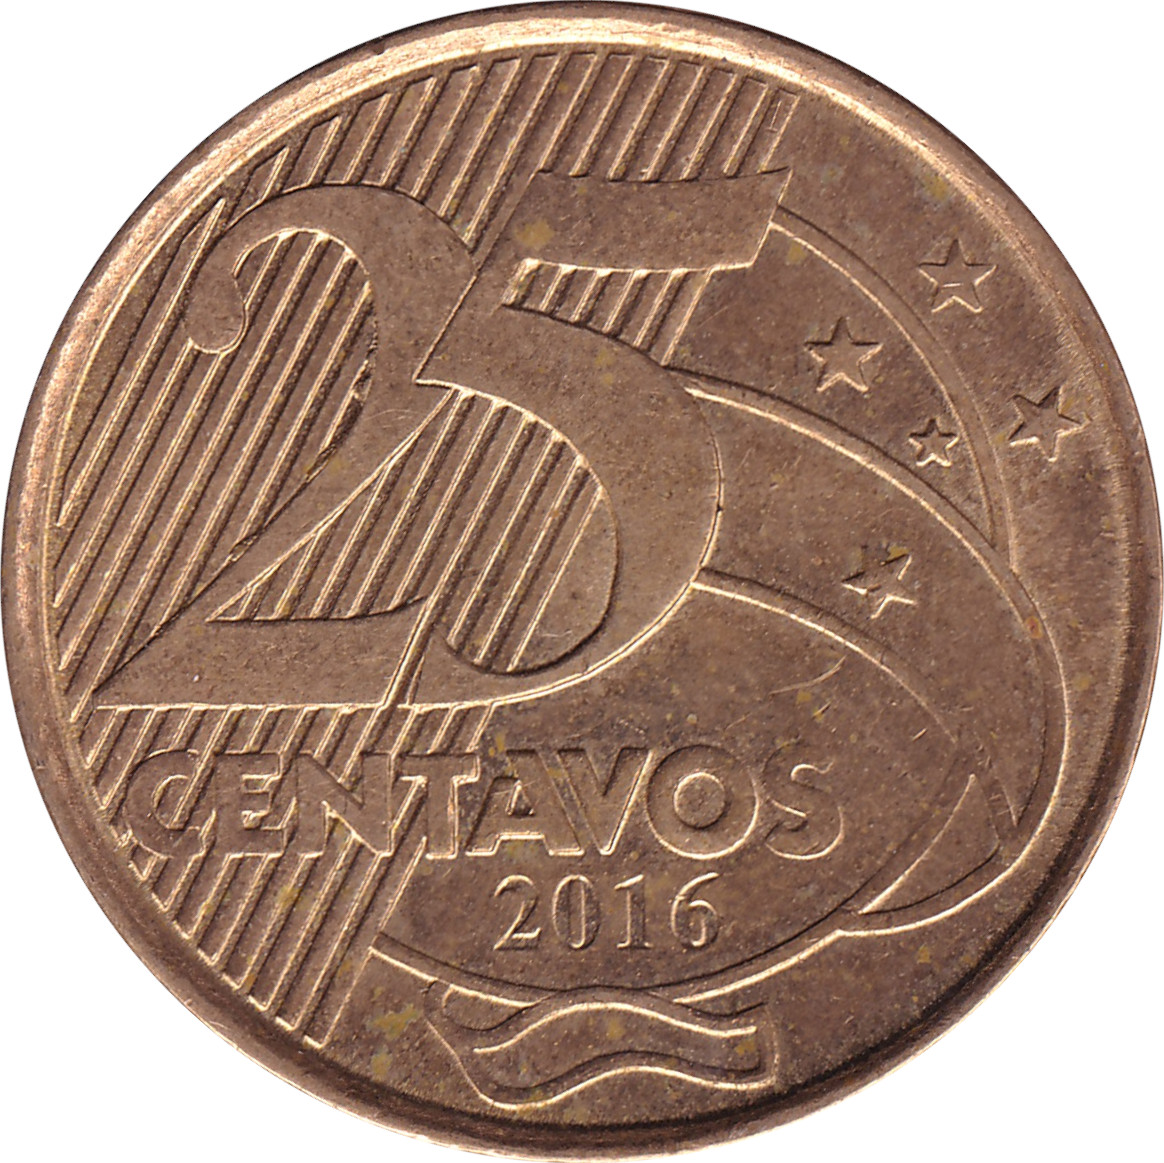 25 centavos - Deodoro da Fonseca